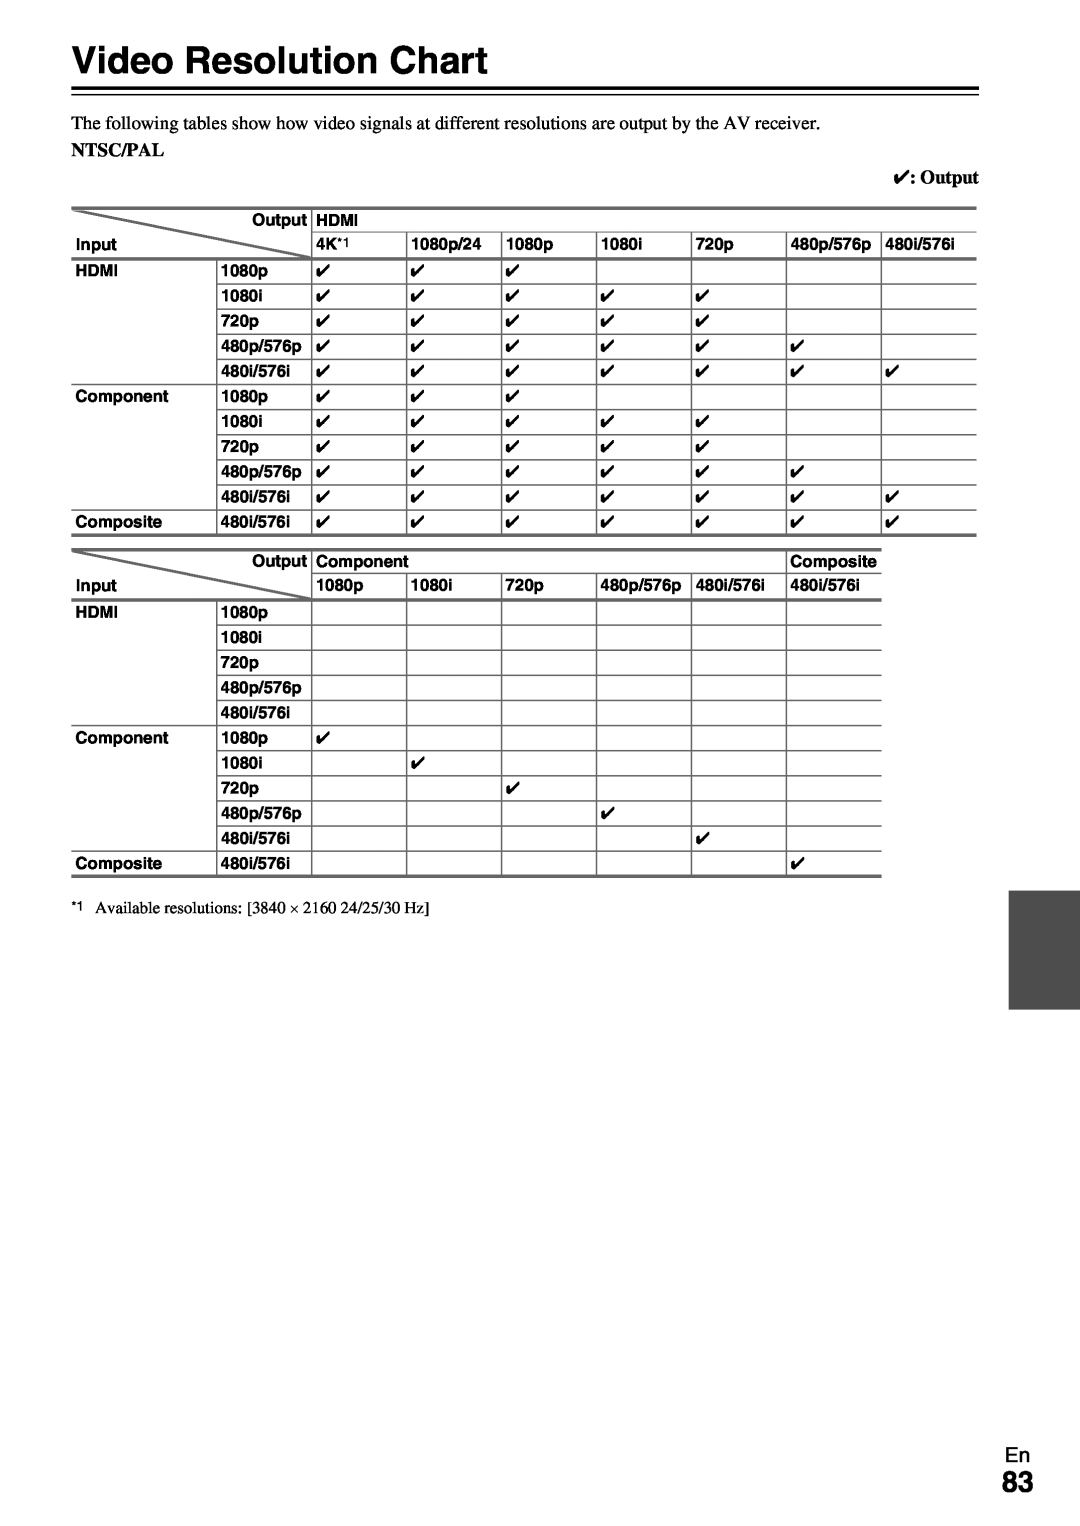 Onkyo TX-NR579 instruction manual Video Resolution Chart, Ntsc/Pal, Output 